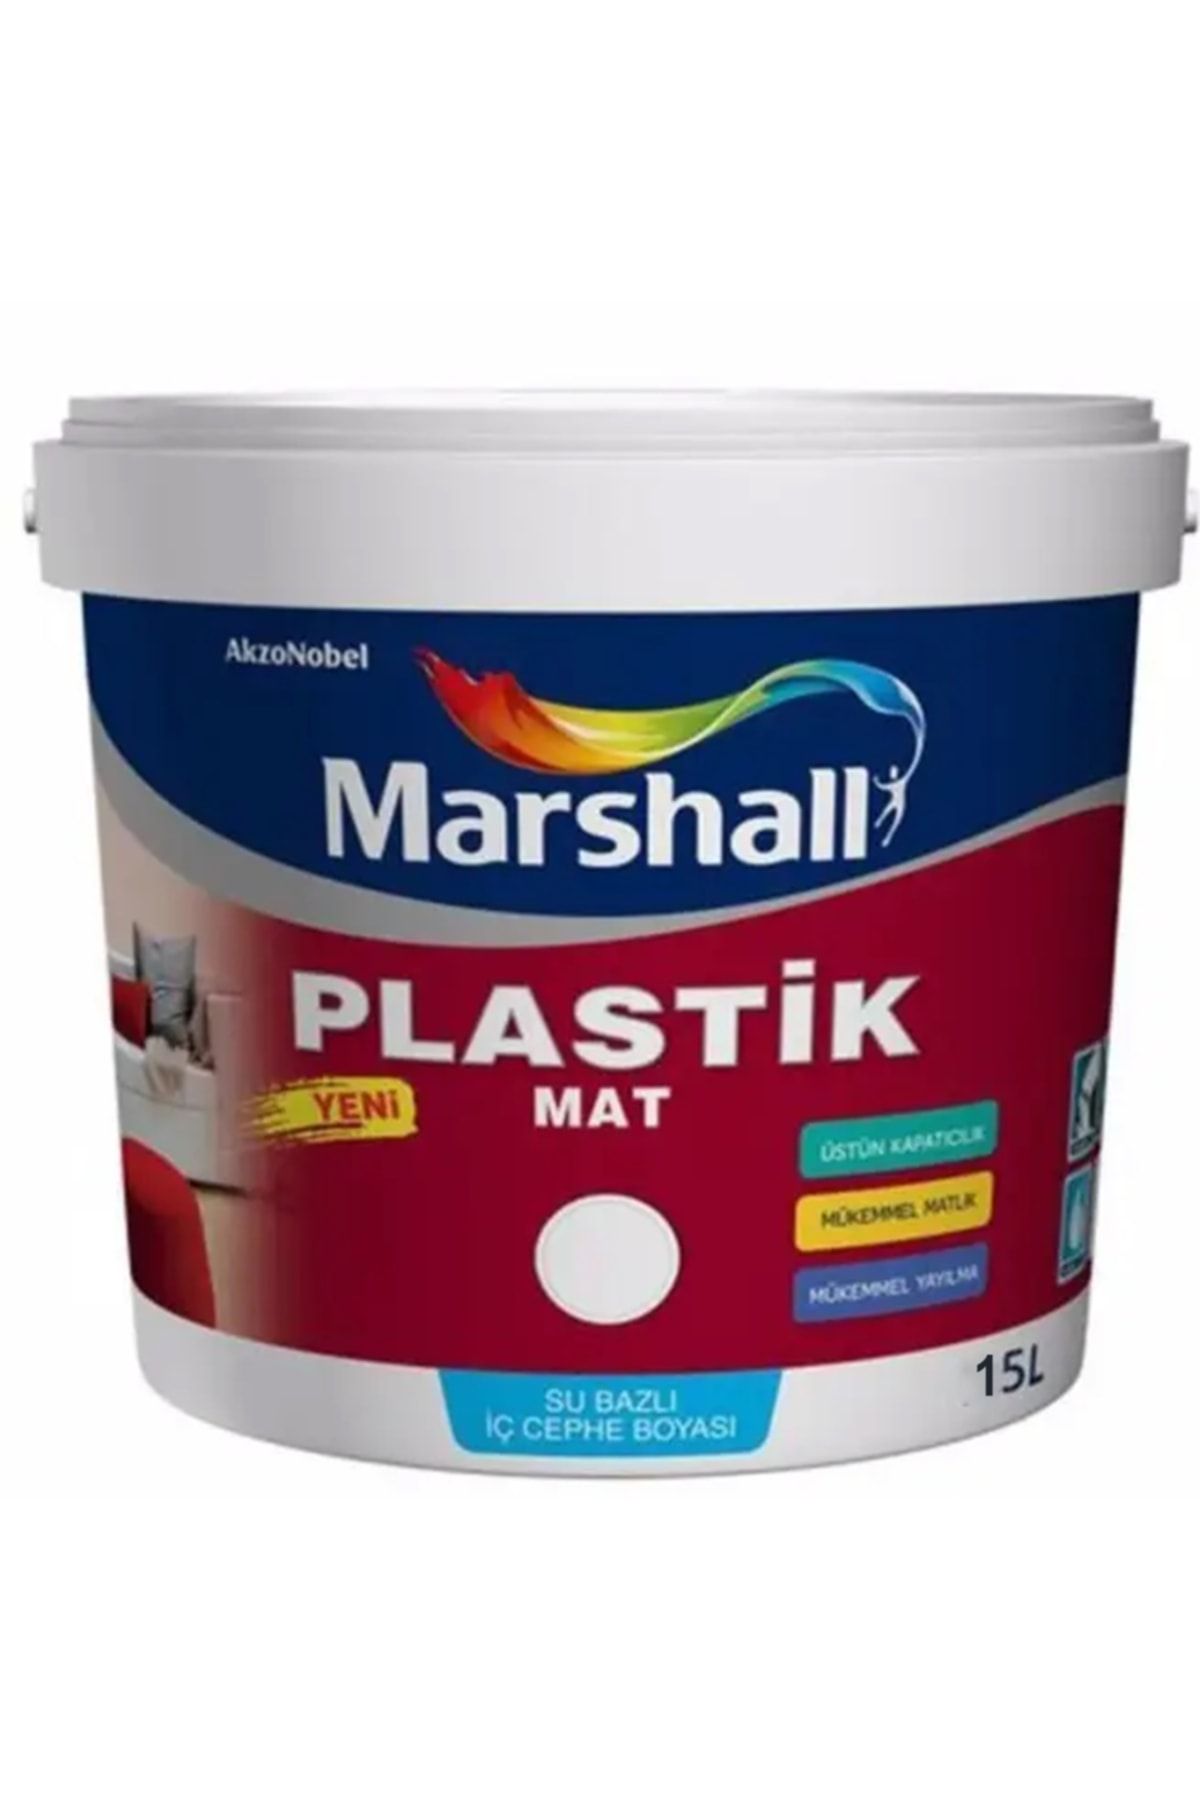 Marshall Plastik Mat Silinebilir Iç Cephe Boyası Kara Incir 15 Lt (20 Kg)